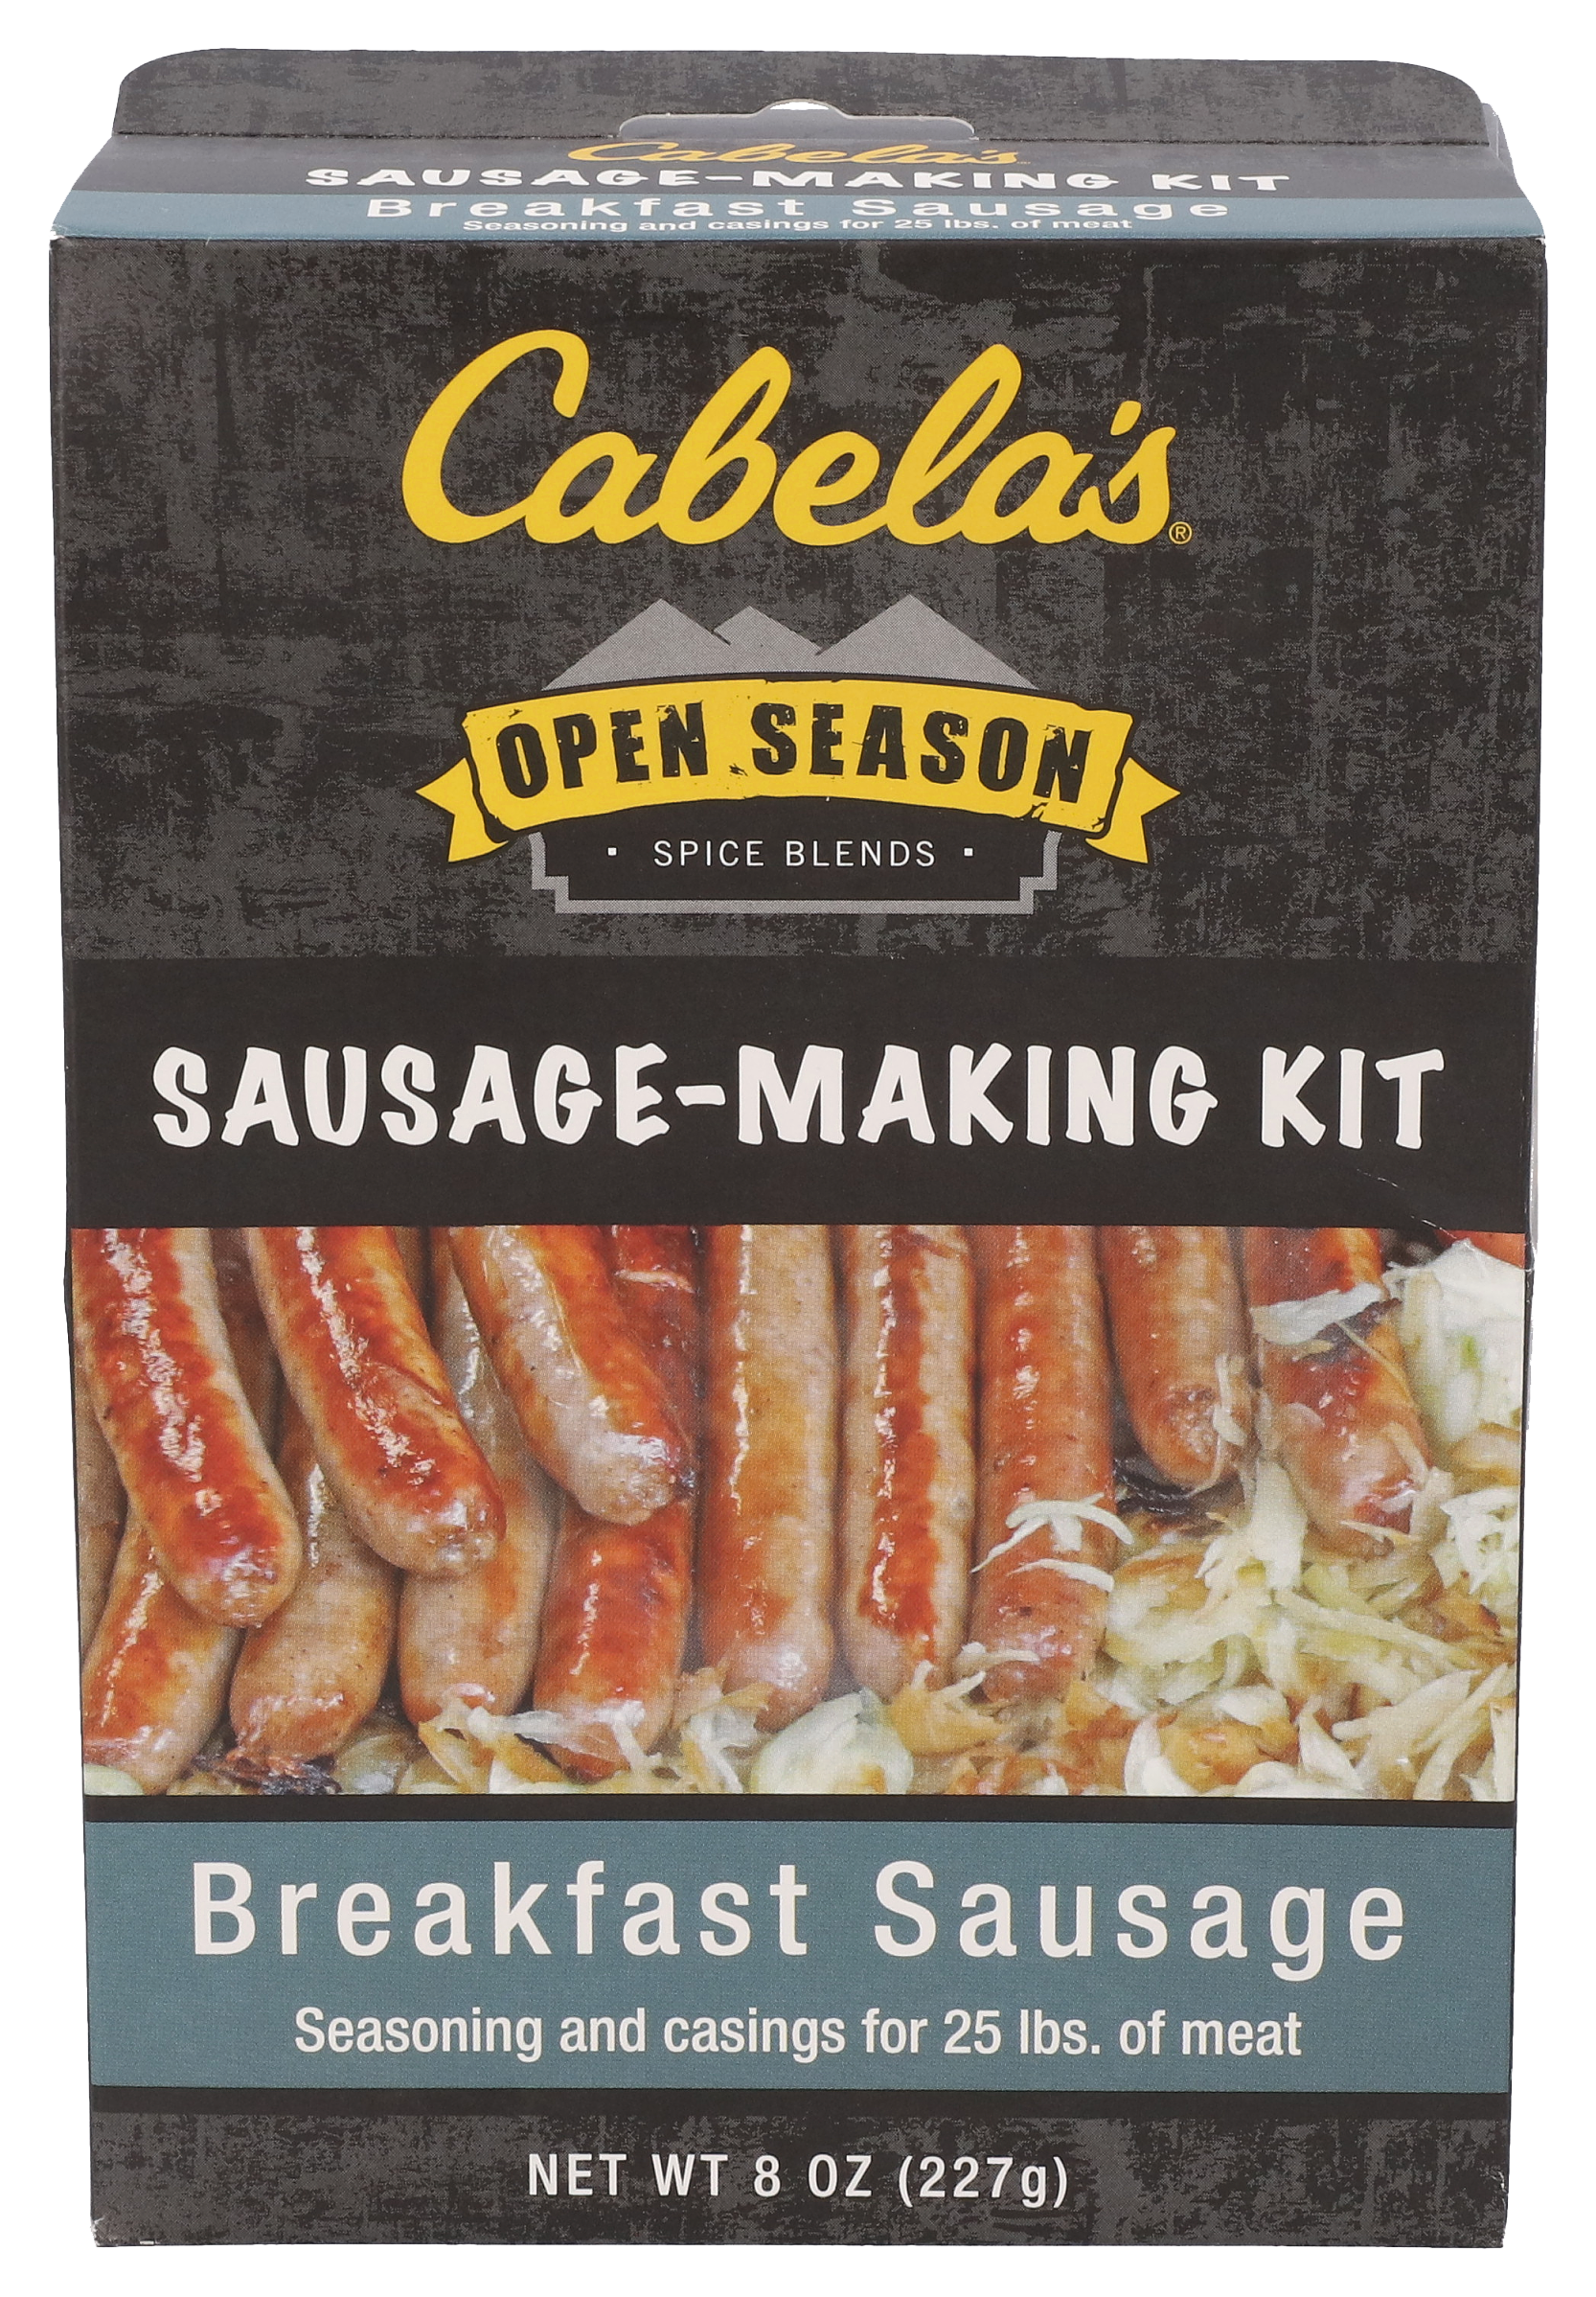 The Sausage Maker - Breakfast Sausage Seasoning, 1 lb. 8 oz.